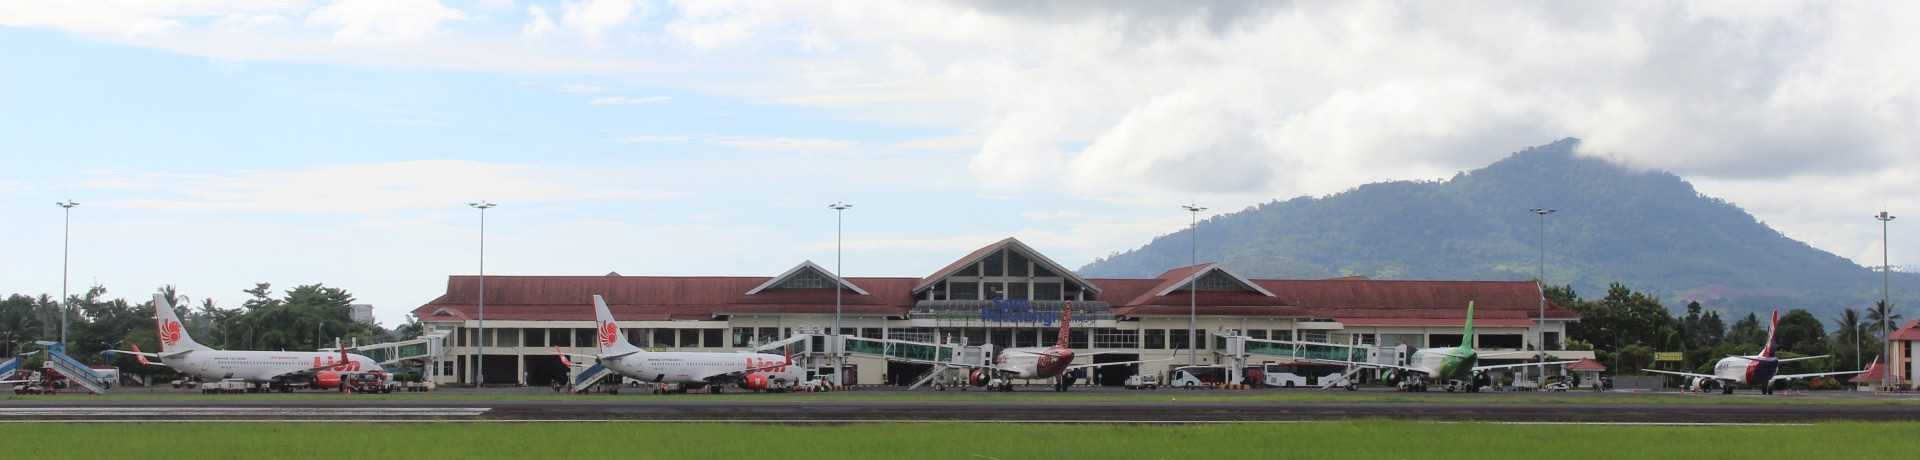 Sam ratulangi adalah nama bandara di provinsi